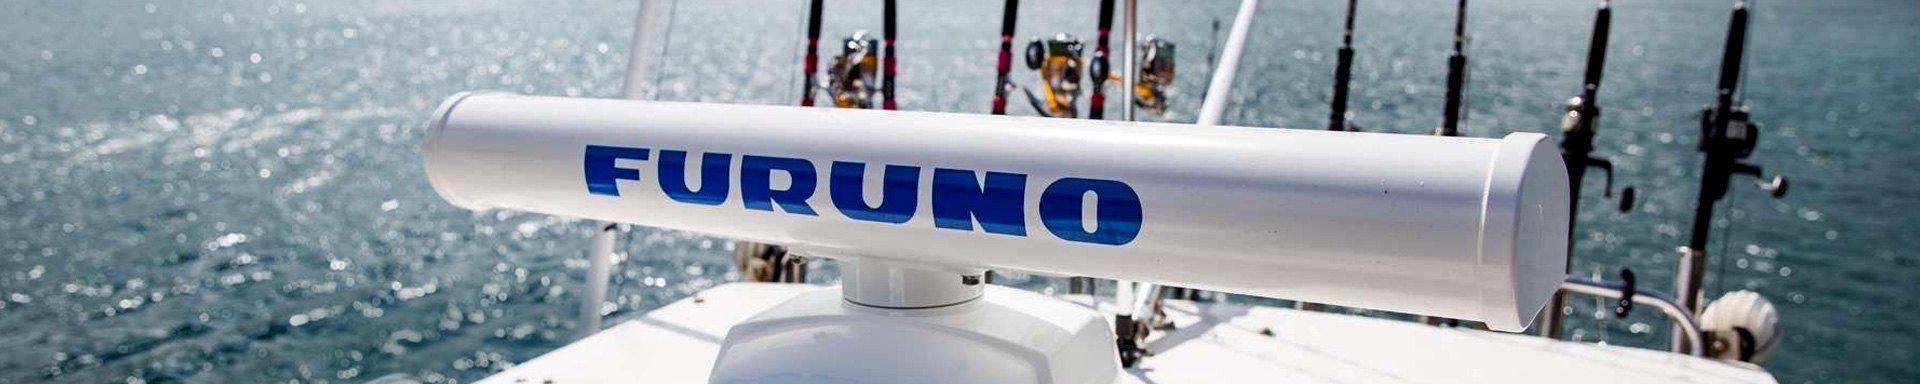 Furuno Boat Anodes